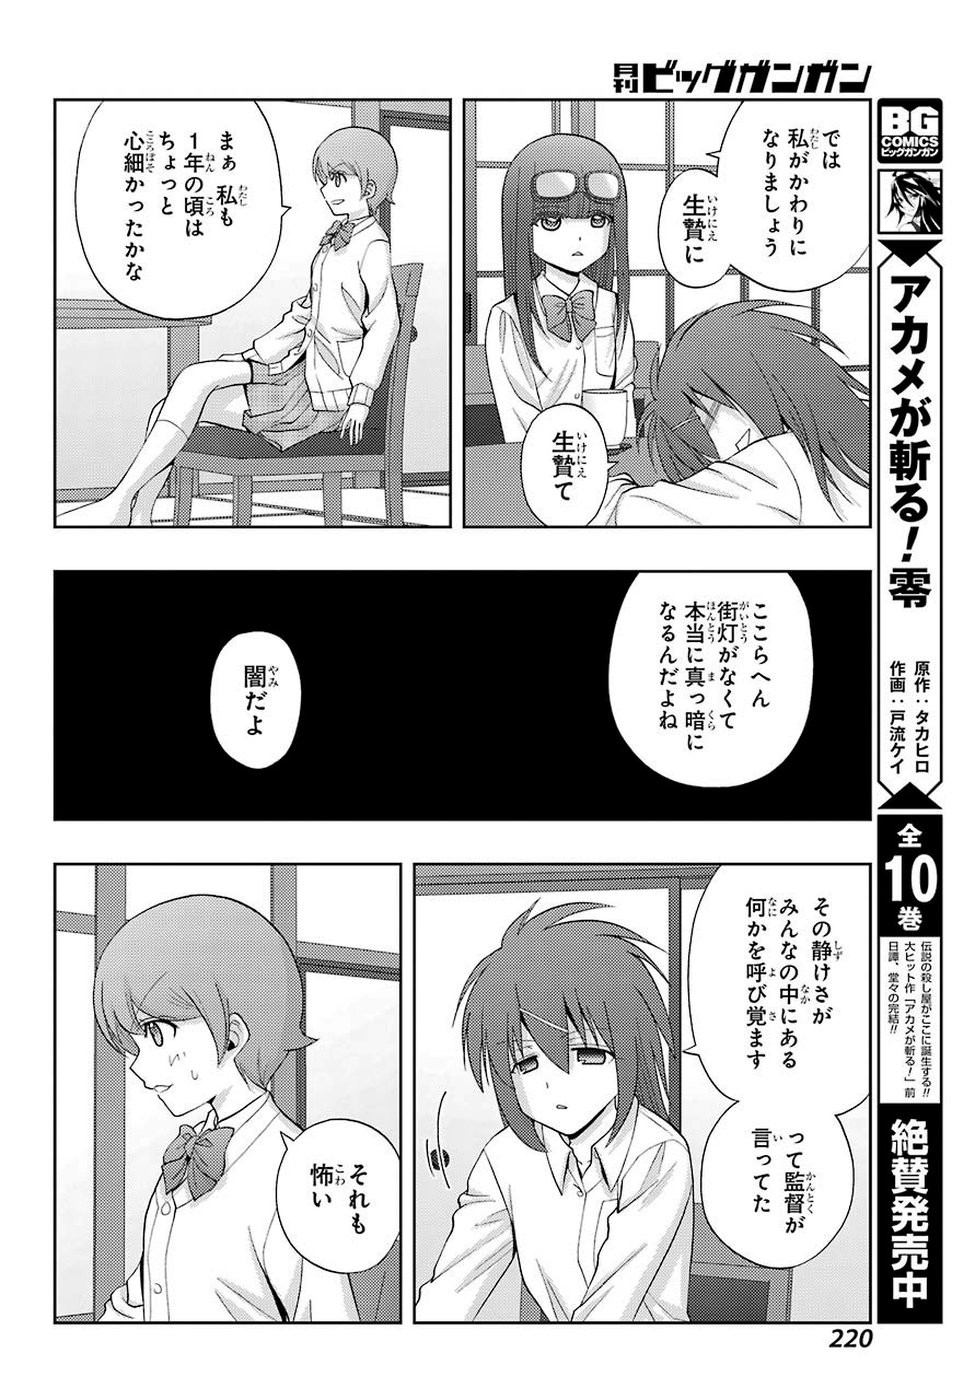 Shinohayu - The Dawn of Age Manga - Chapter 073 - Page 20